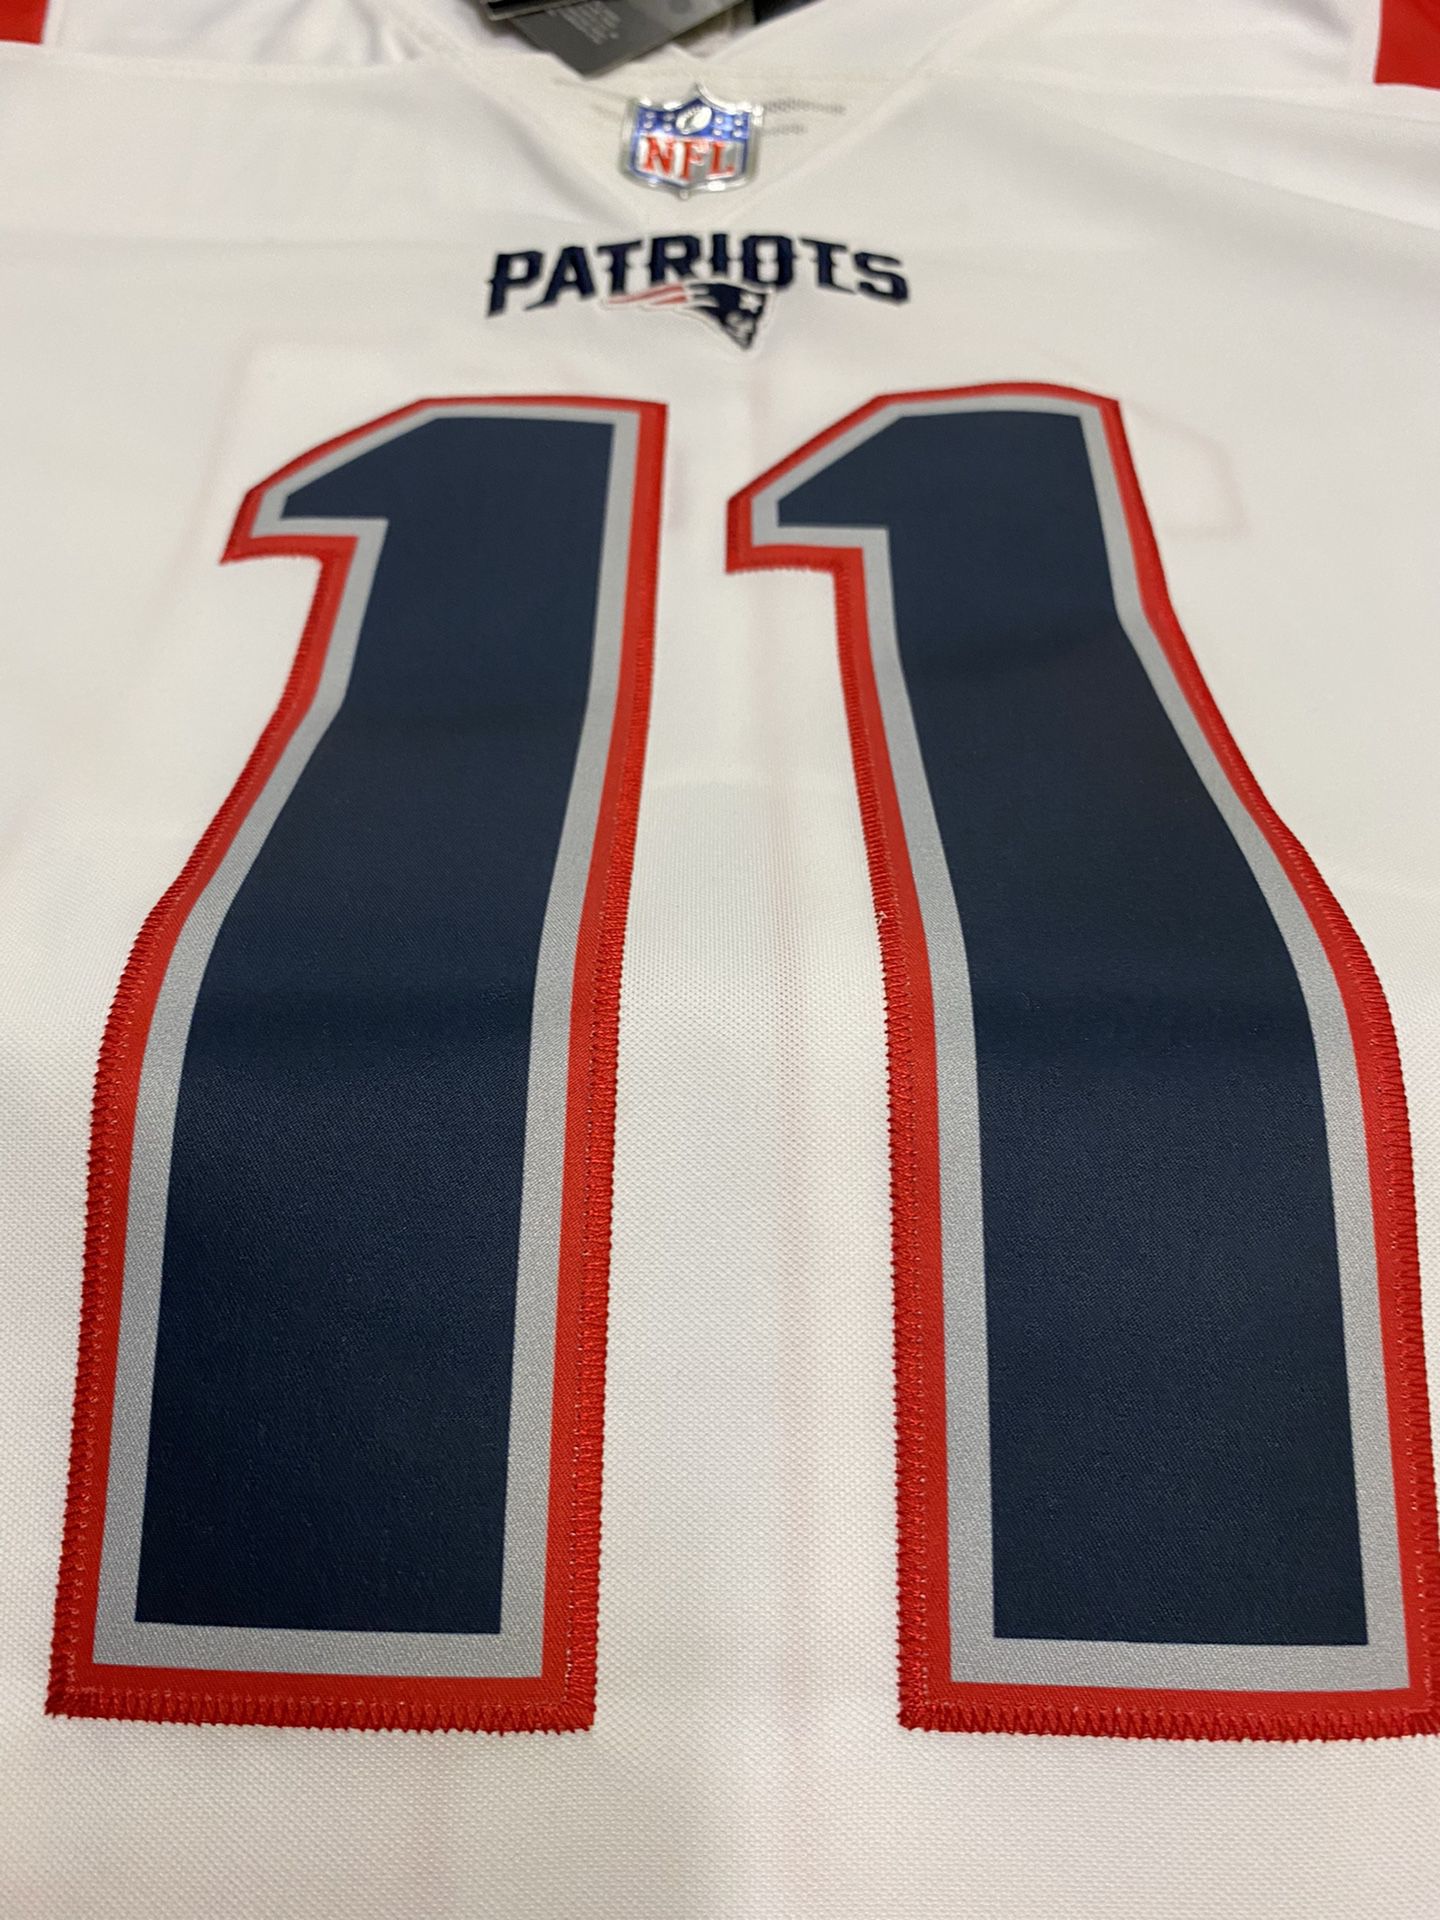 Patriots jersey